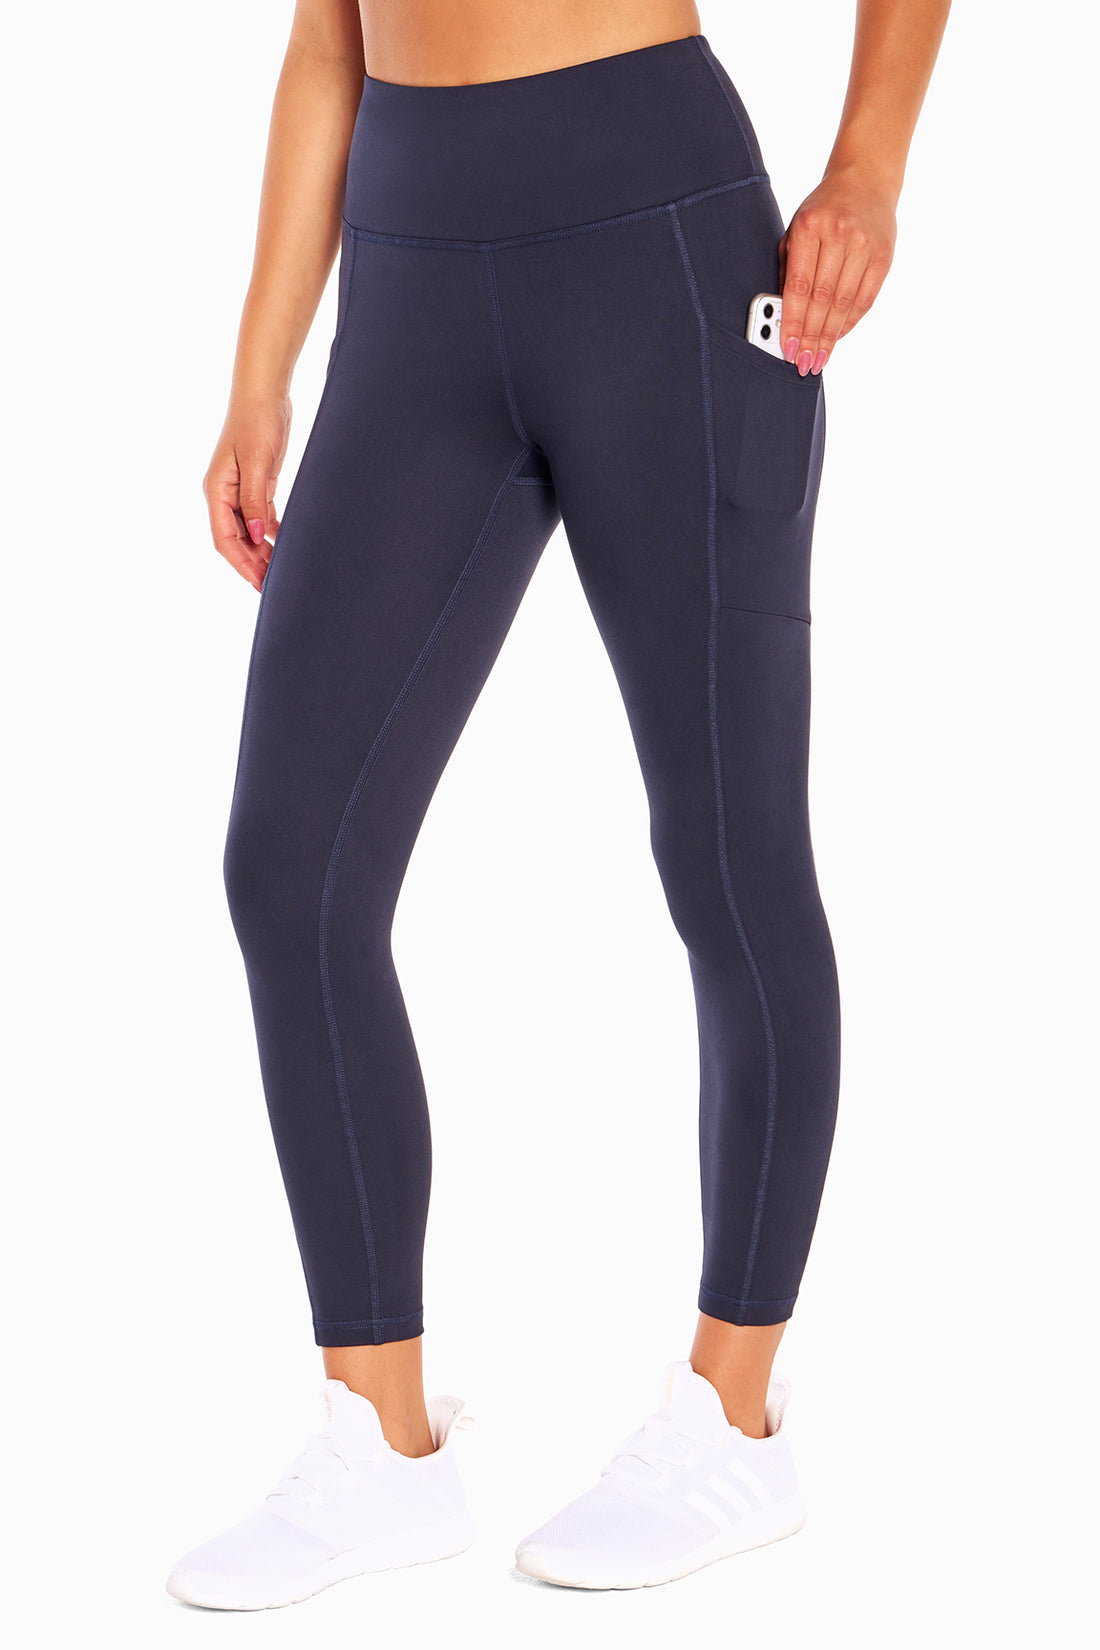 Balance Collection, Pants & Jumpsuits, Balance Collection Yoga High Waist  Pant Black And Pink Size Xlarge 618